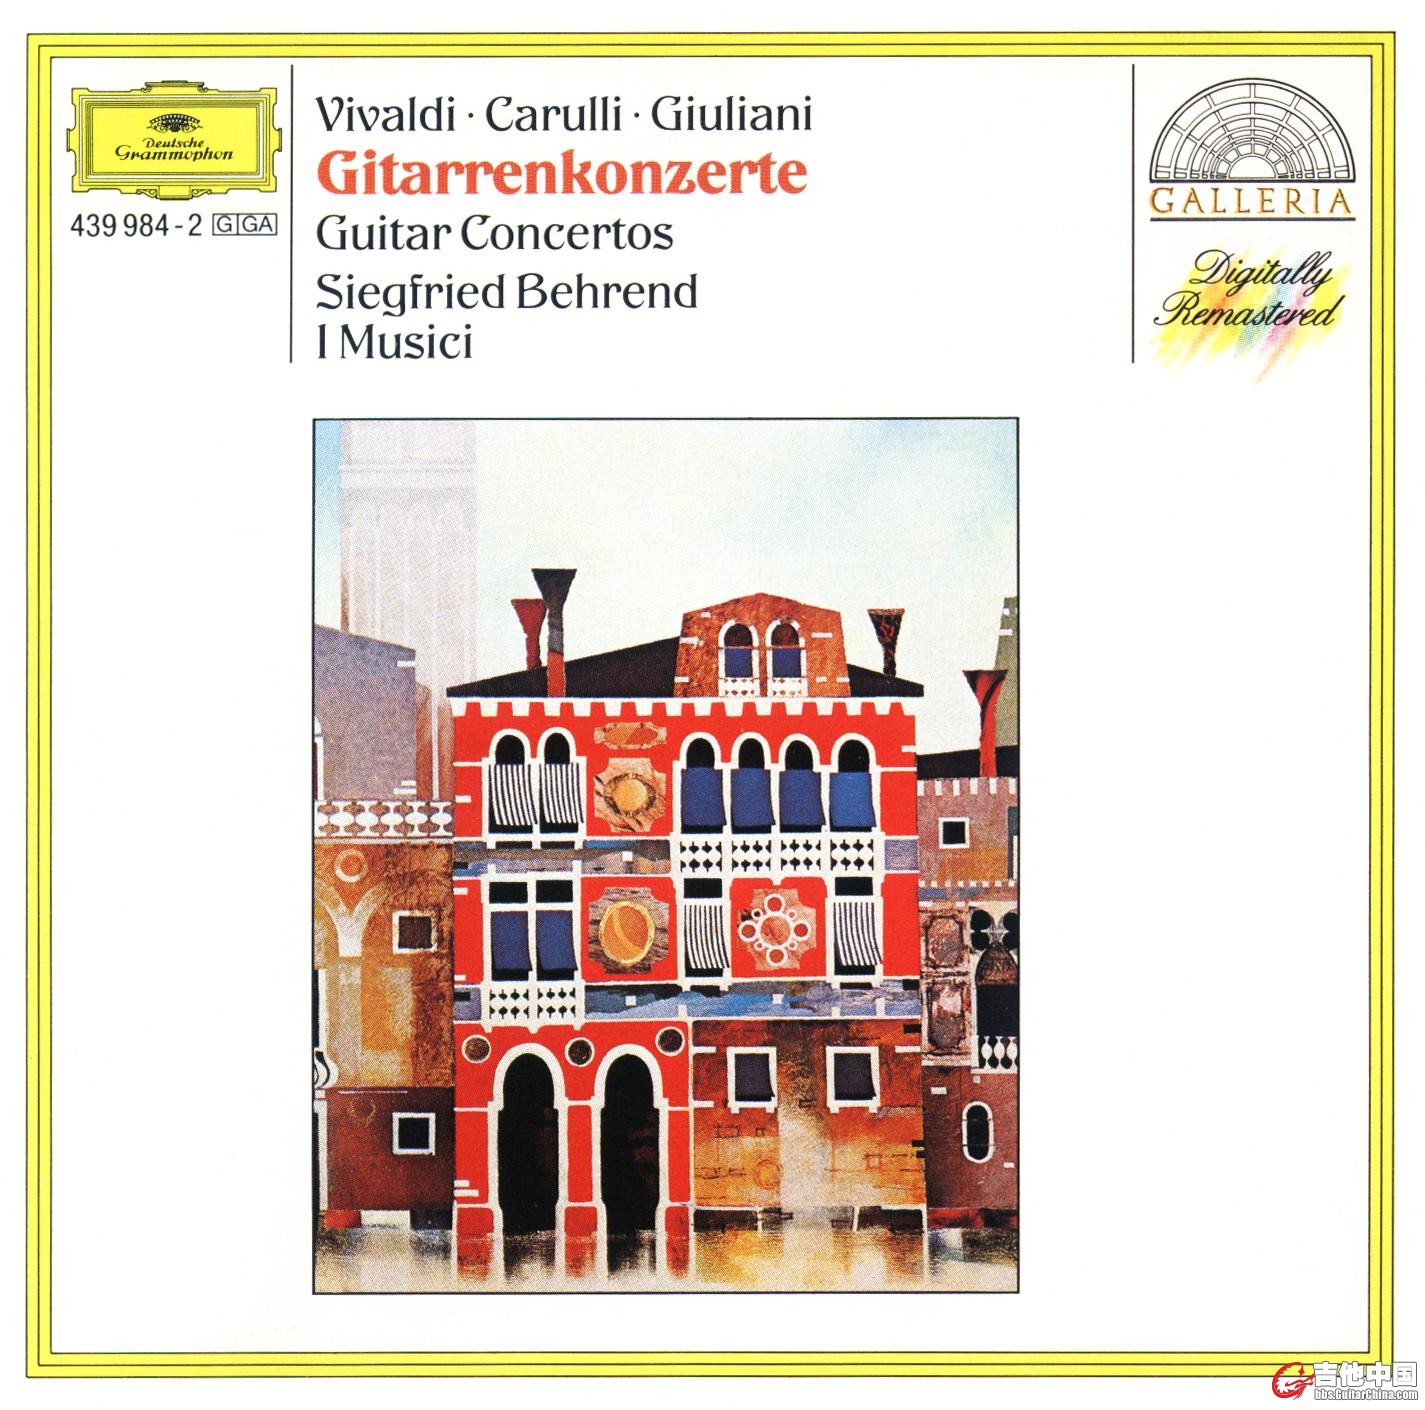 维瓦尔第Vivaldi卡露里Carulli朱利亚尼Giuliani吉他协奏曲Guitar Concertos.JPG